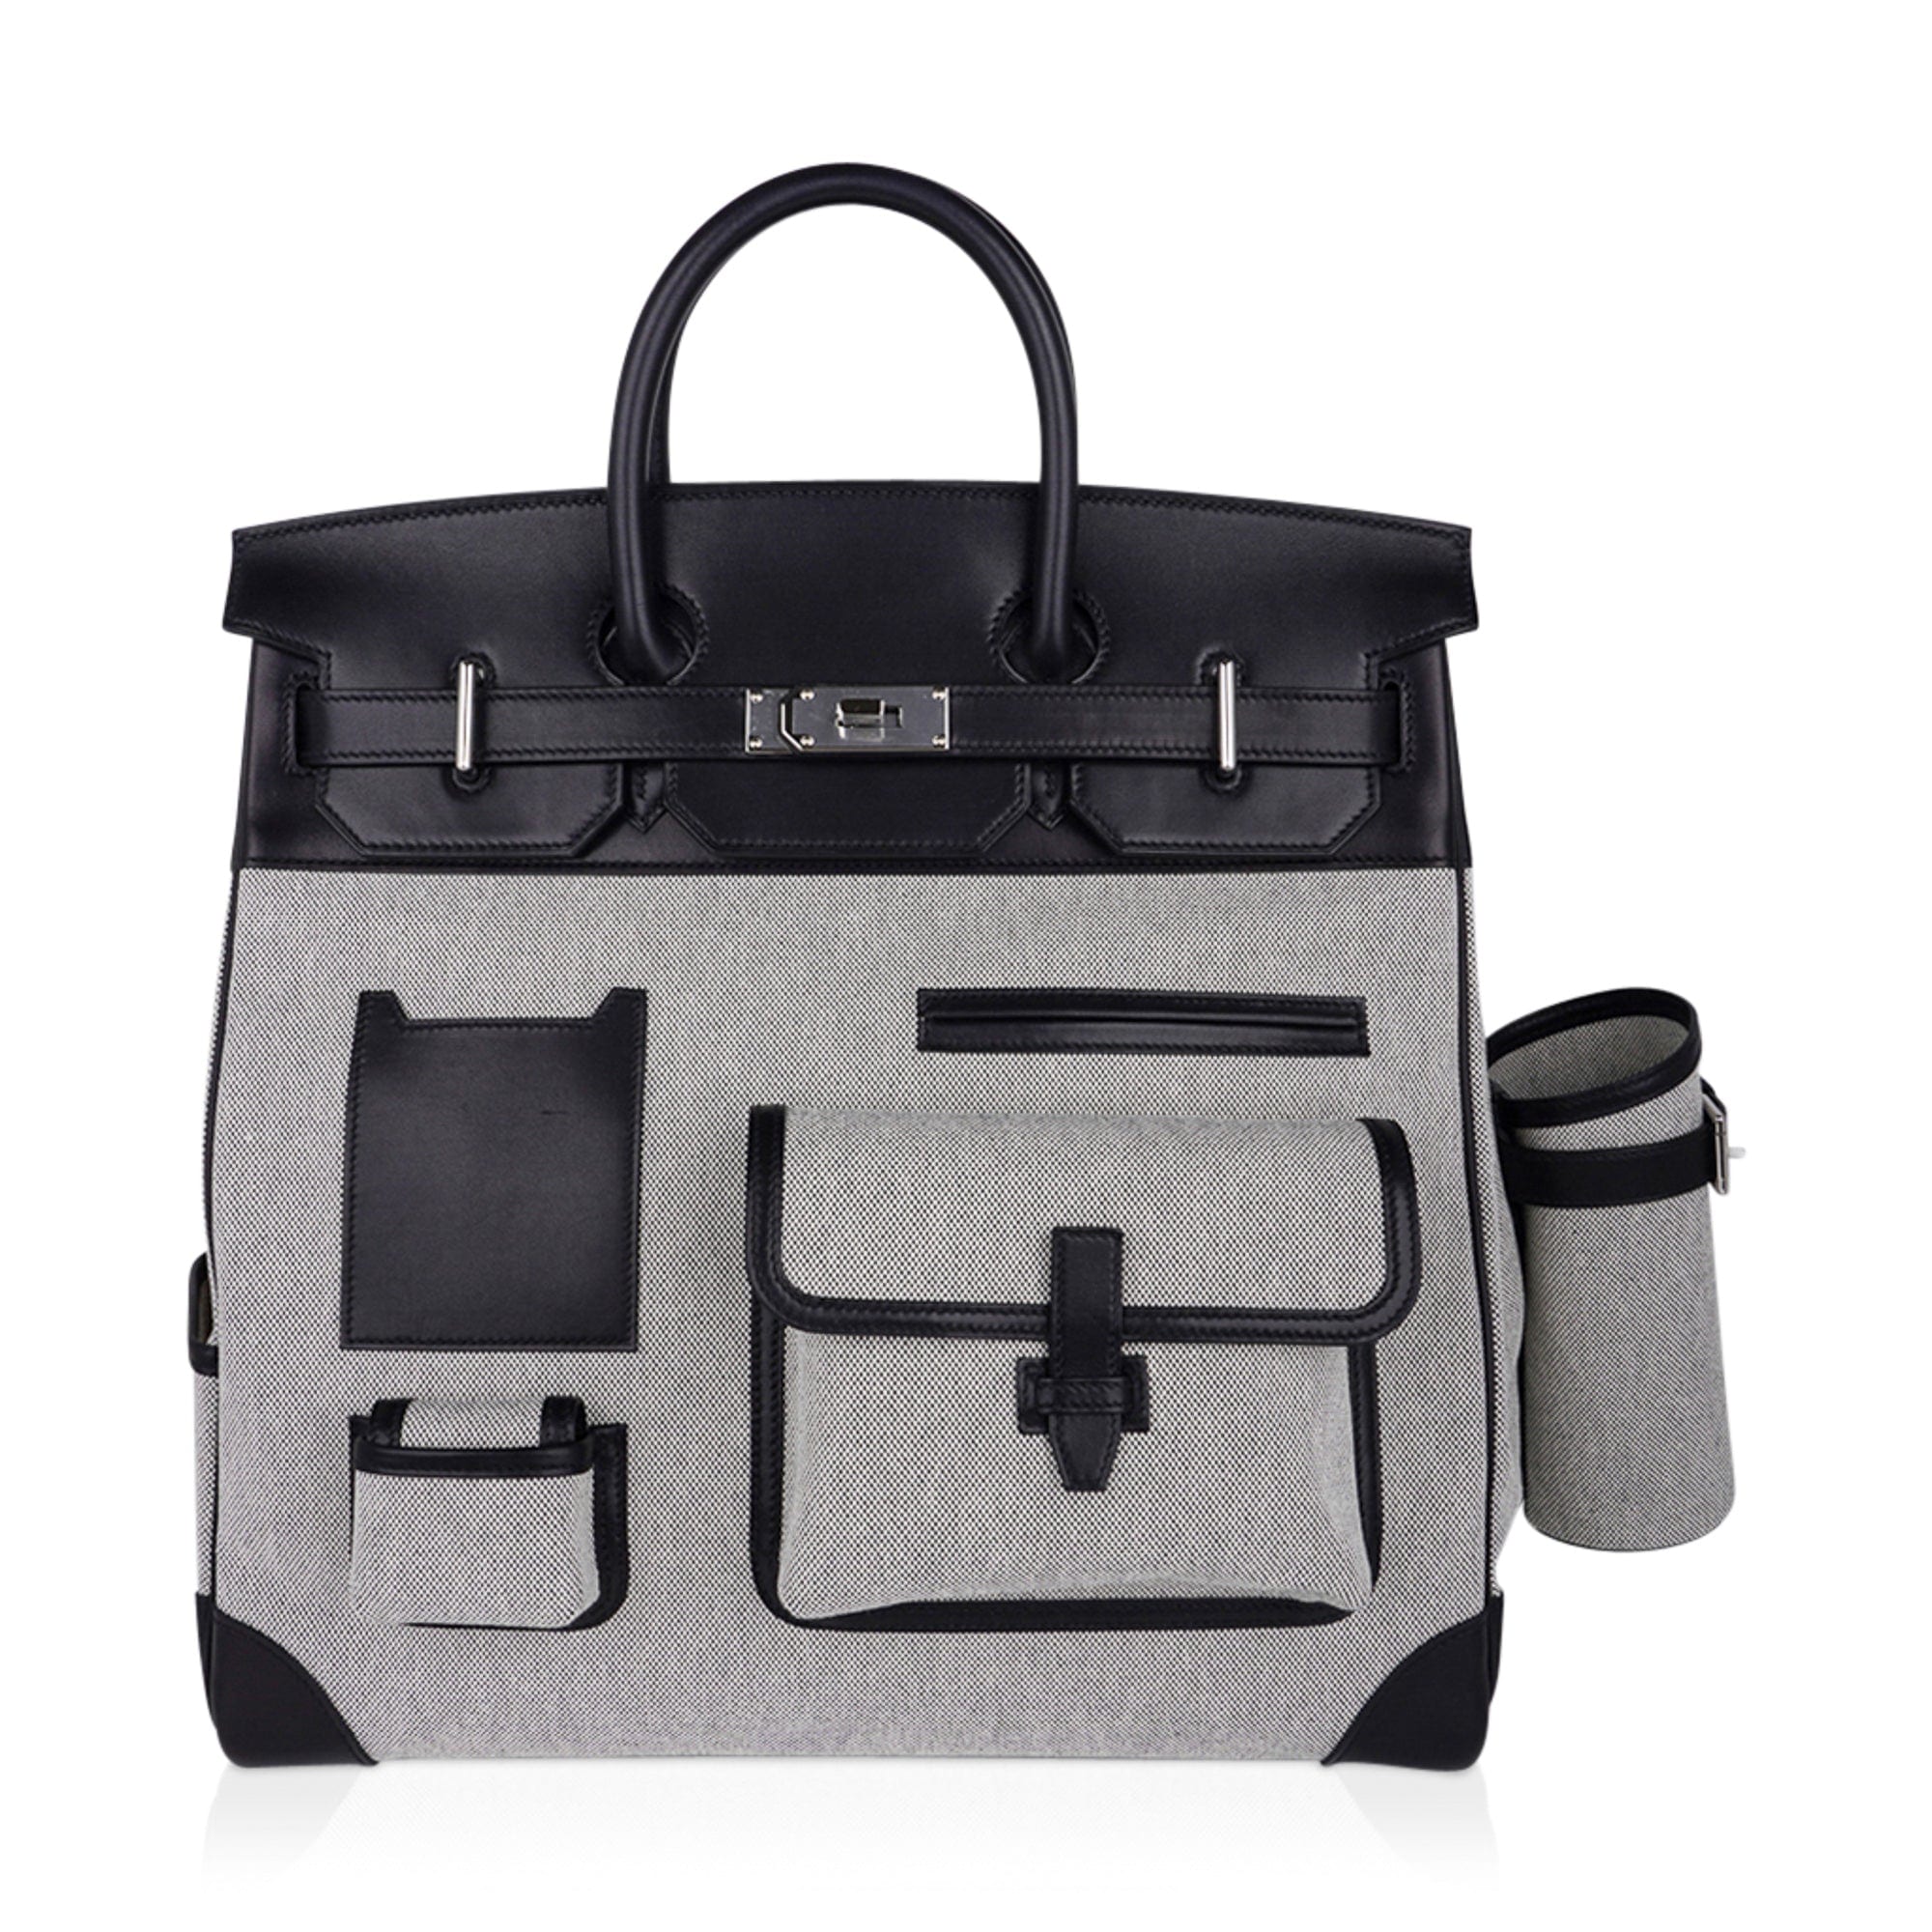 Hermes Travel Bags & Accessories